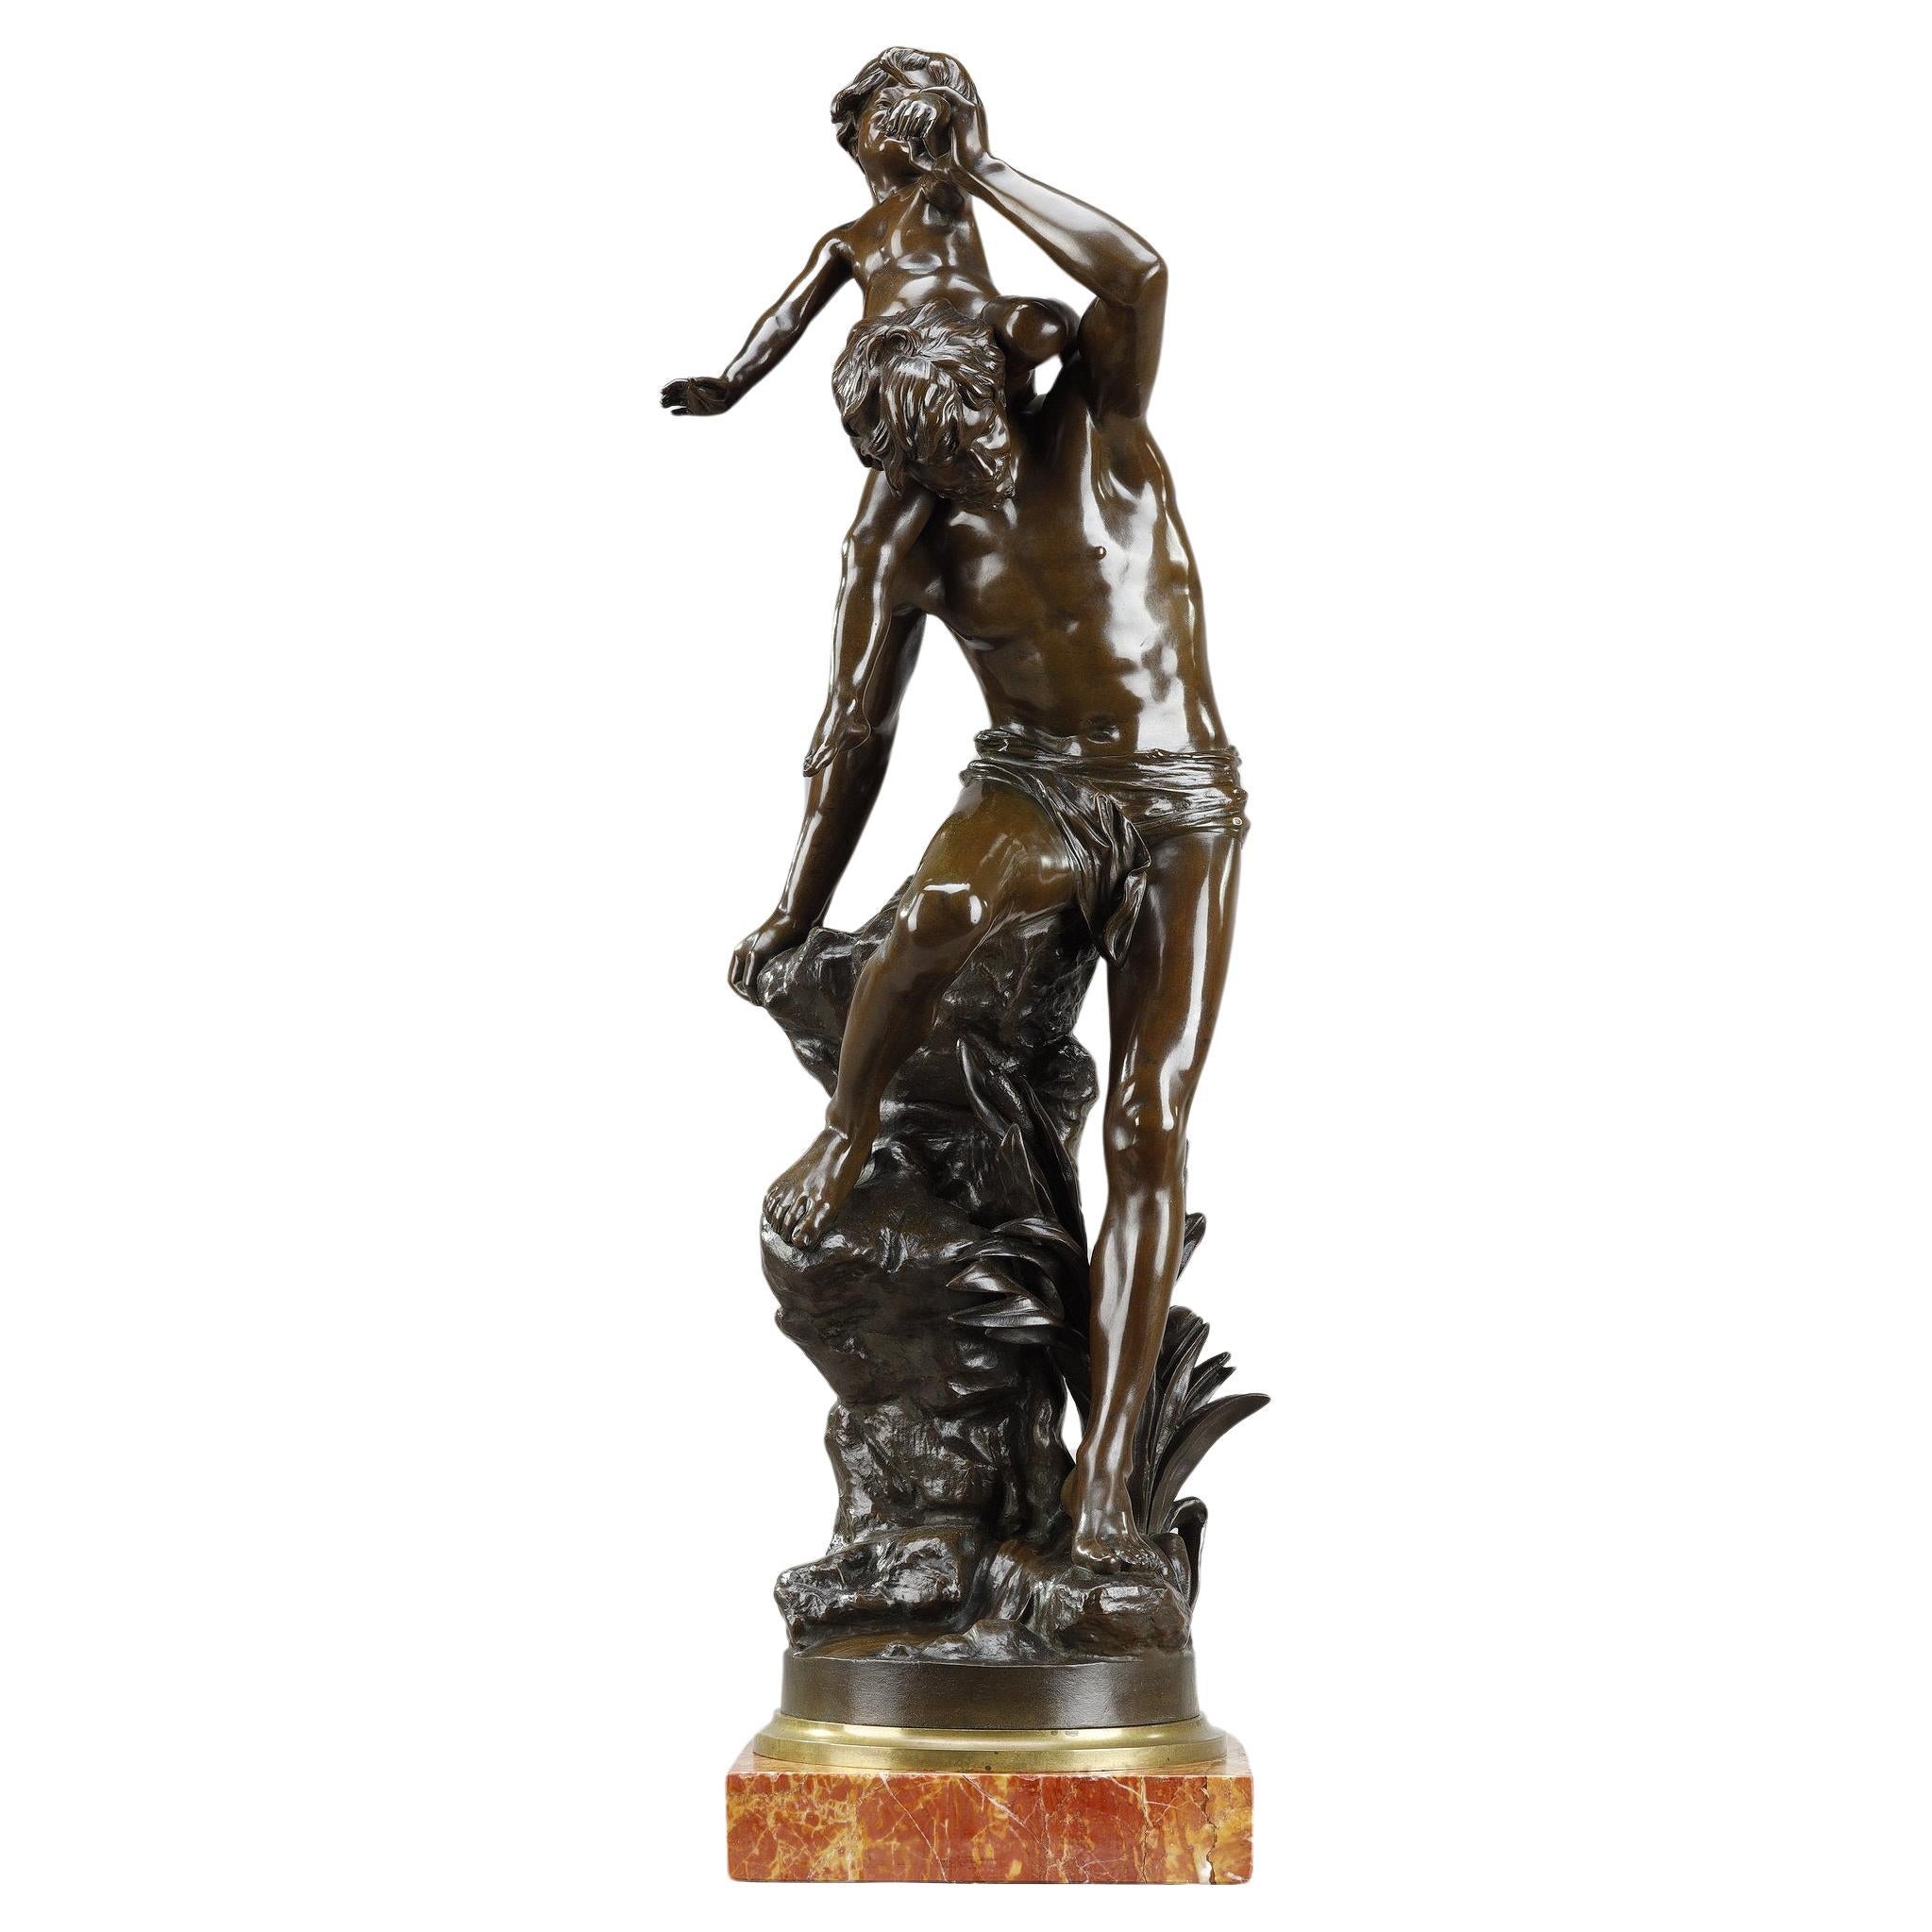 Bronze sculpture "Man carrying a child", signed Gaston Leroux